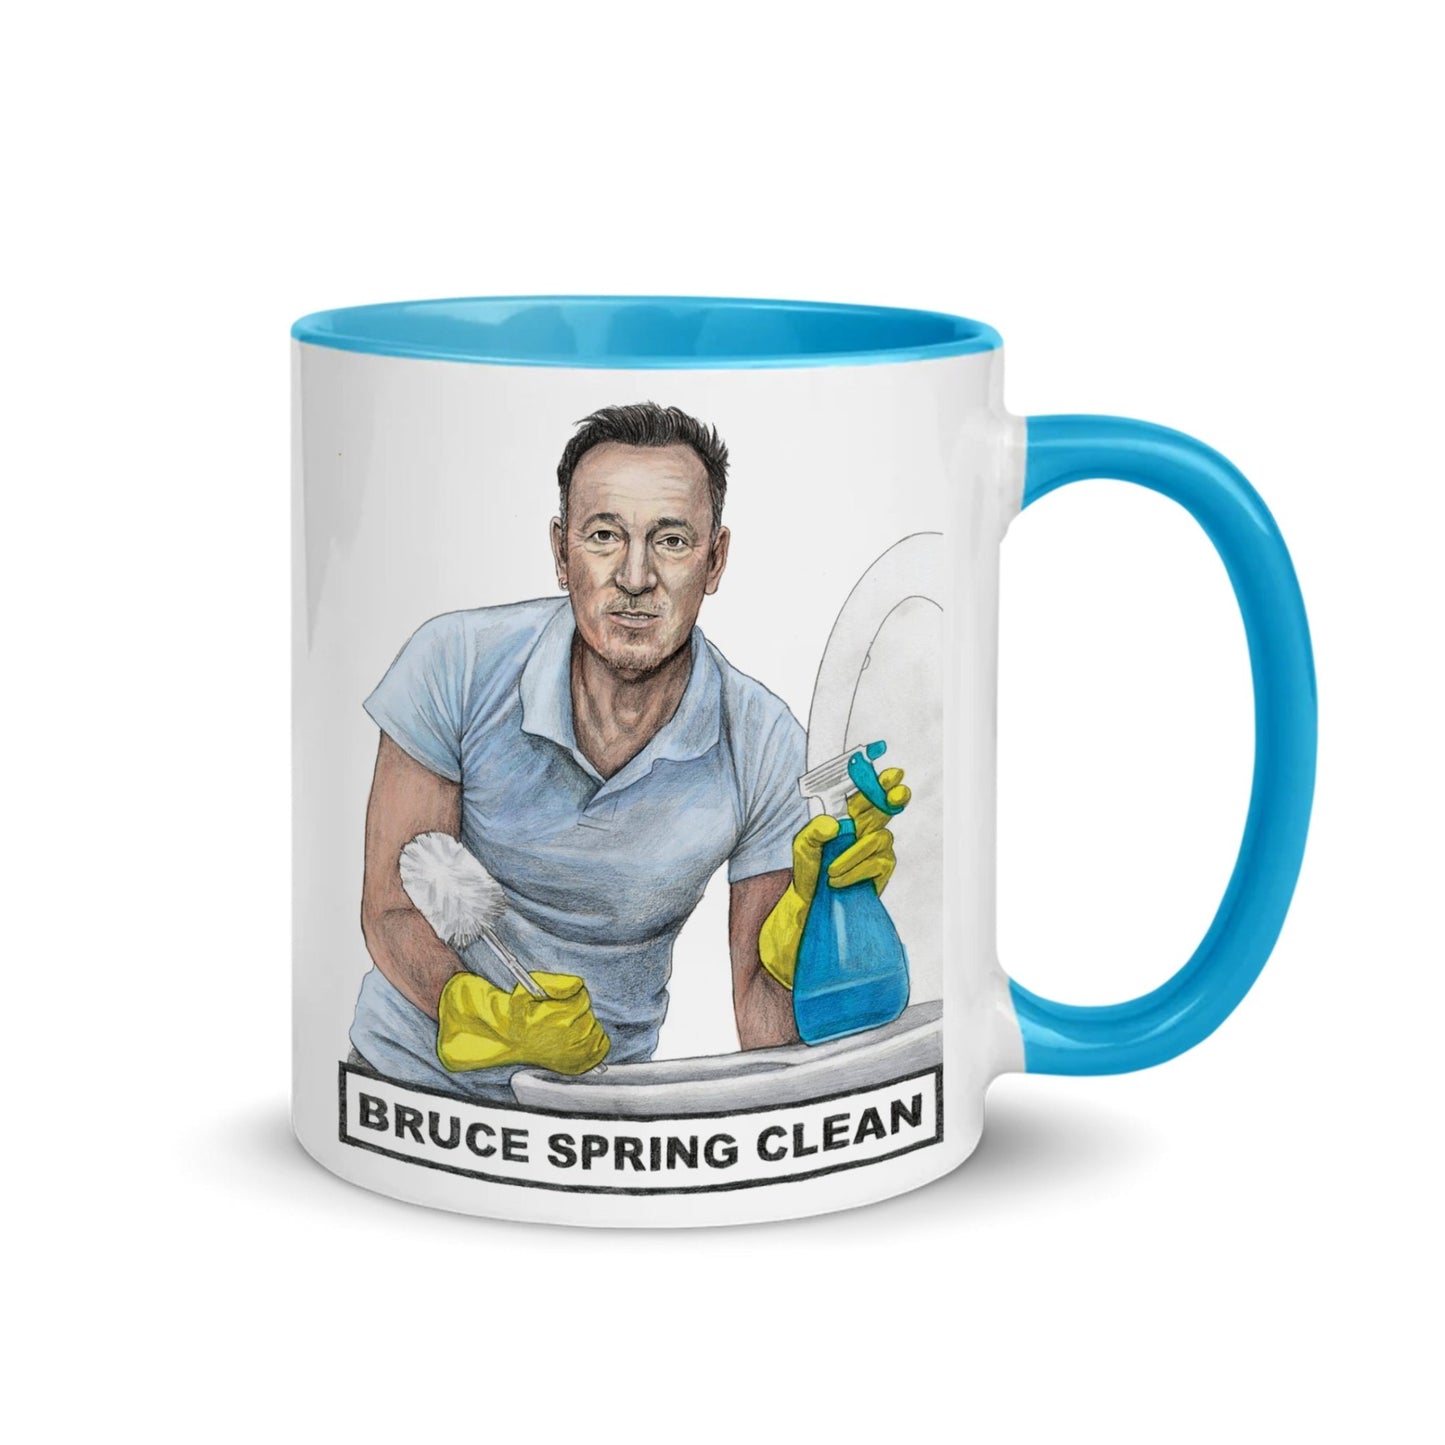 Bruce Spring Clean Ceramic Mug - Quite Good Cards Funny Birthday Card